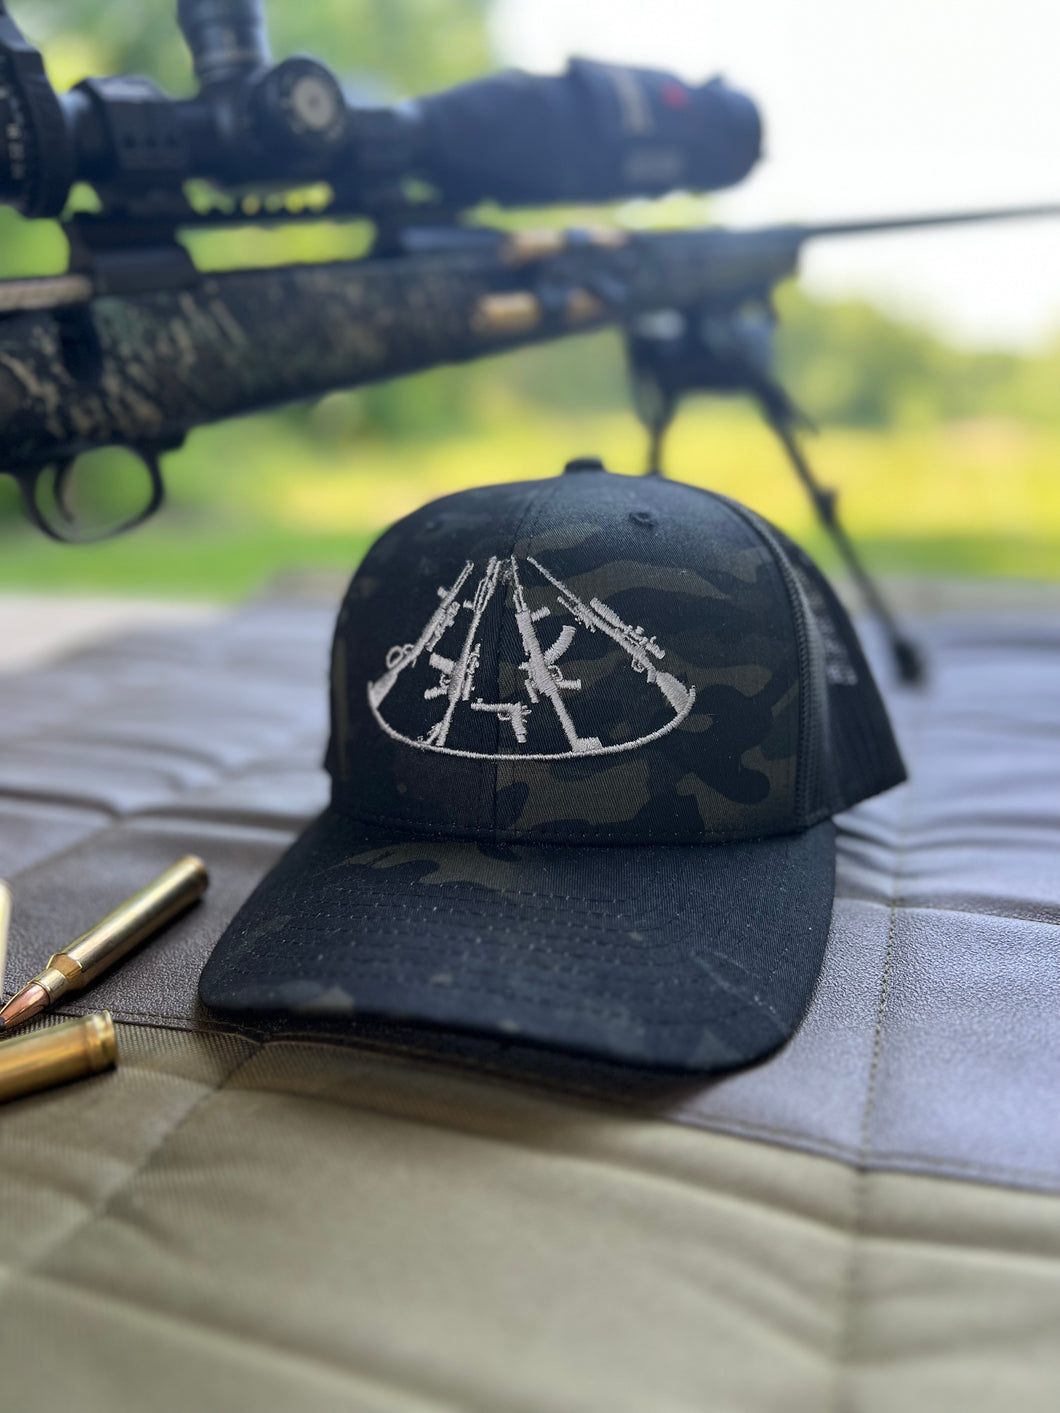 Authentic American Arms Camo Cap